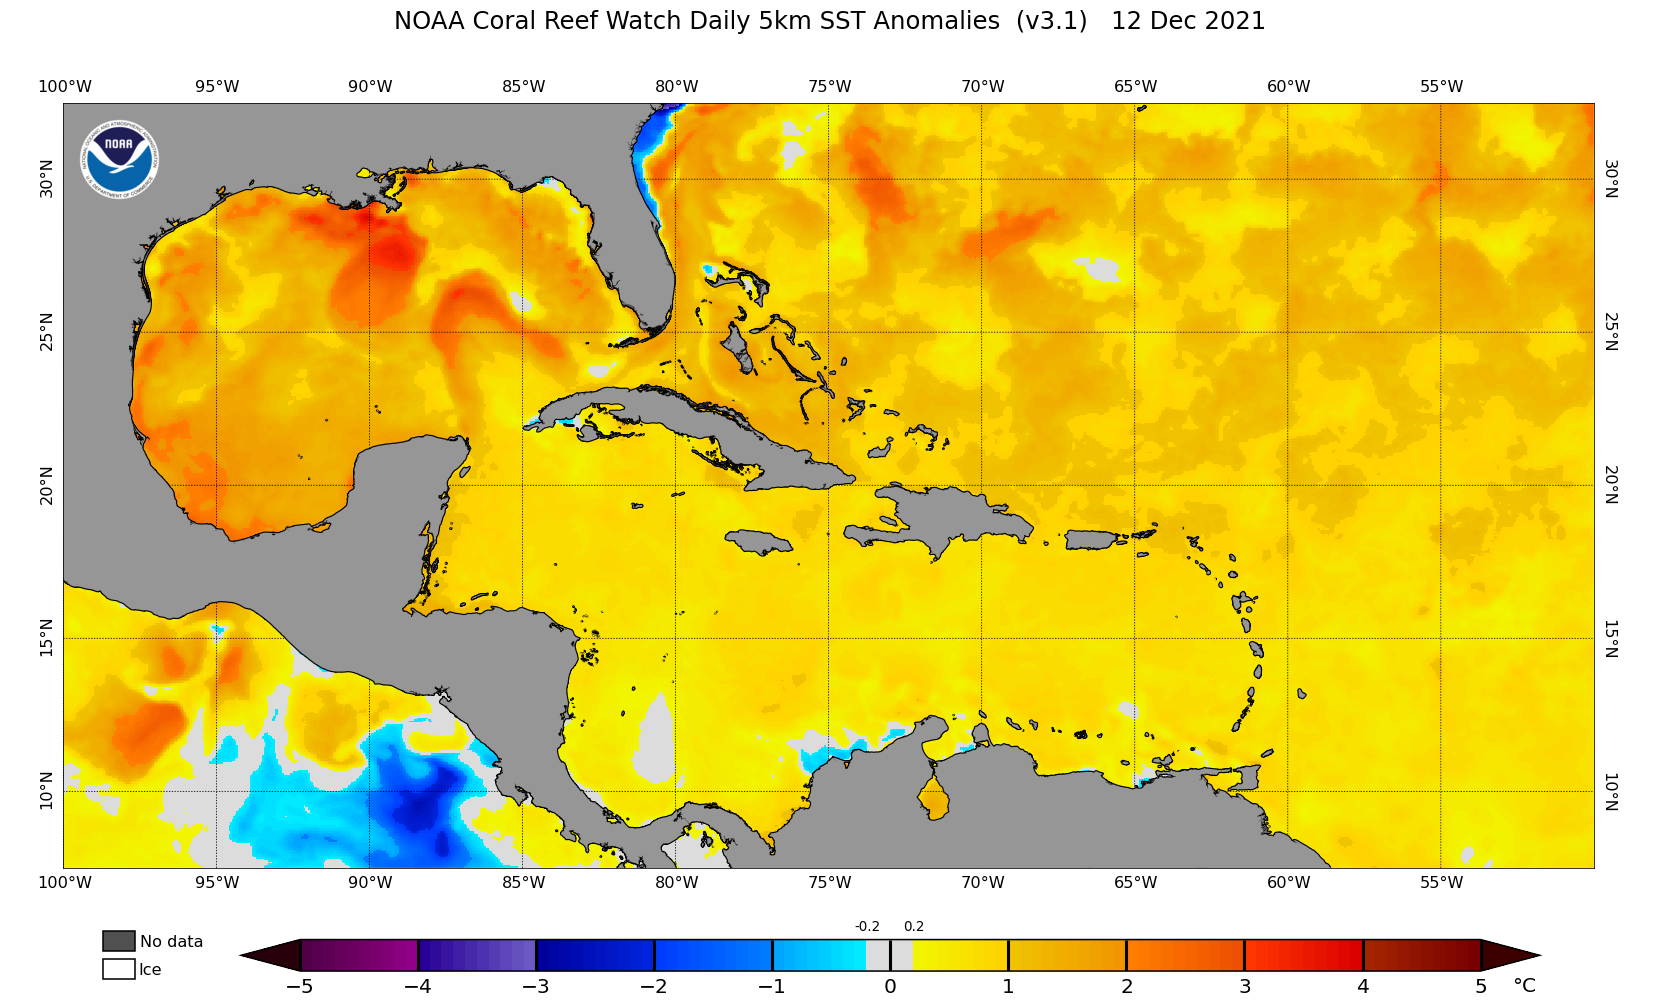 NOAA Coral Reef Watch Daily 5km SST Anomalies, Dec 10, 2021.